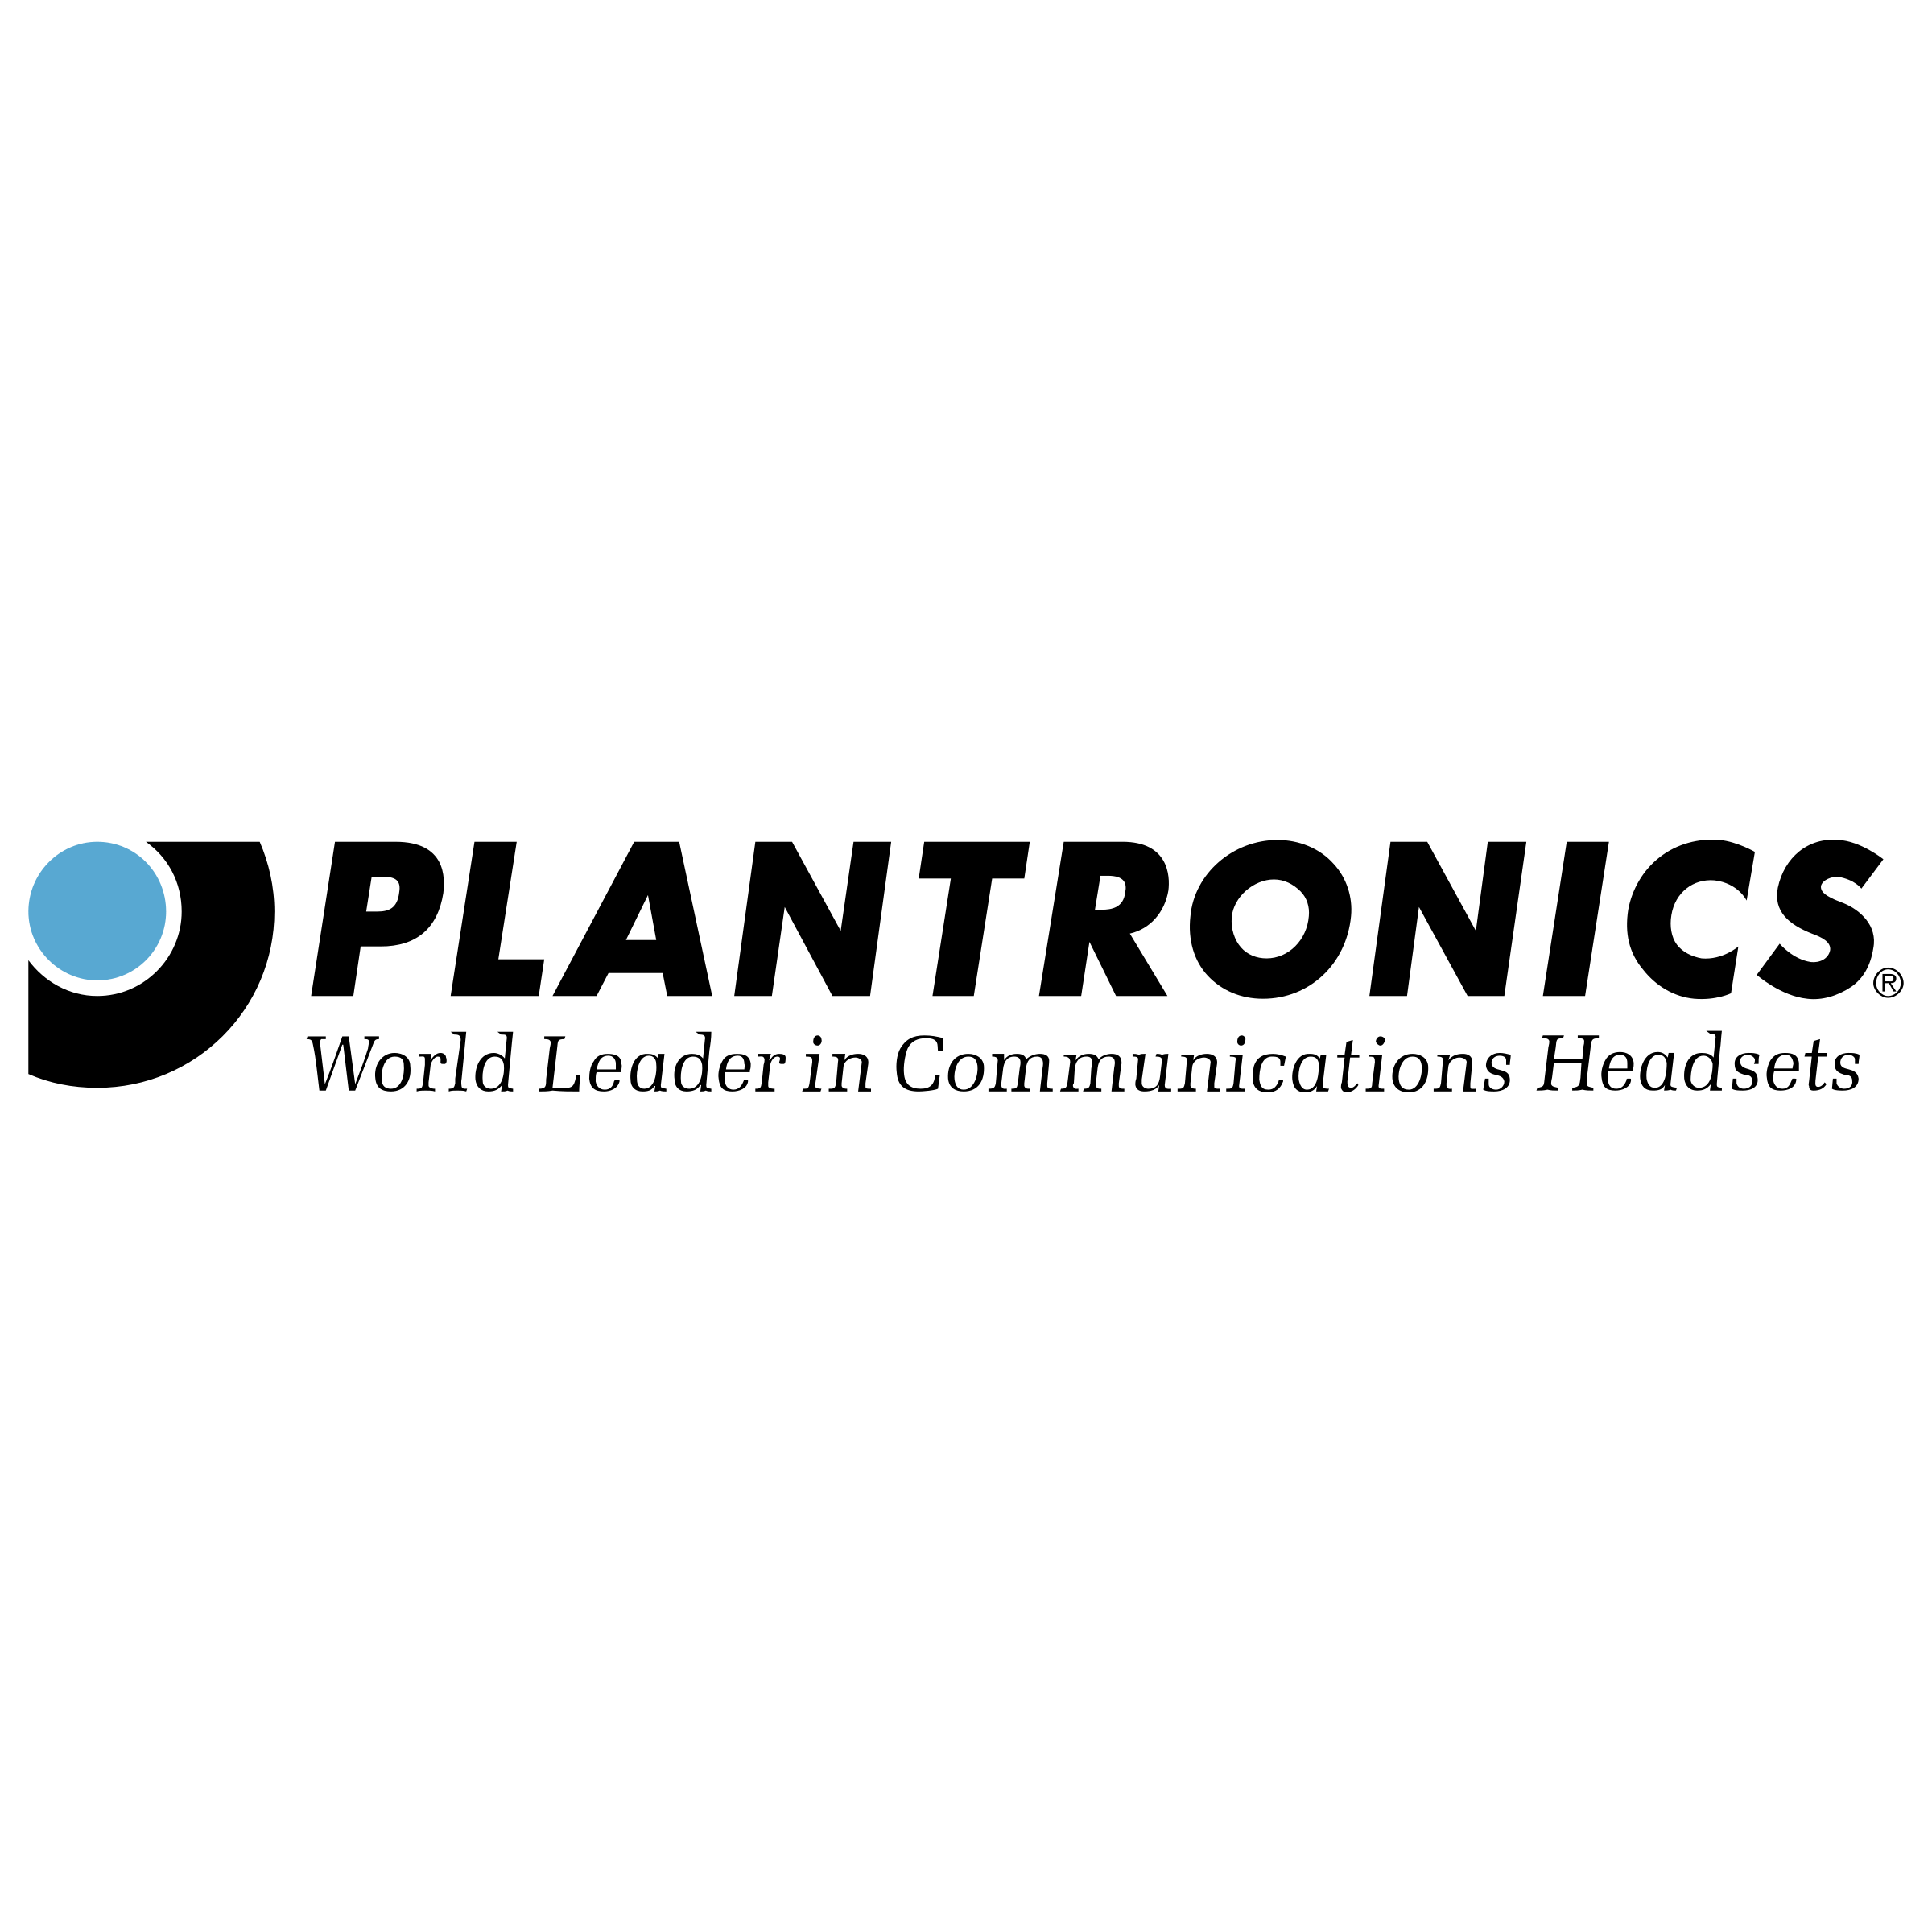 Plantronics Logo - Plantronics Logo PNG Transparent & SVG Vector - Freebie Supply